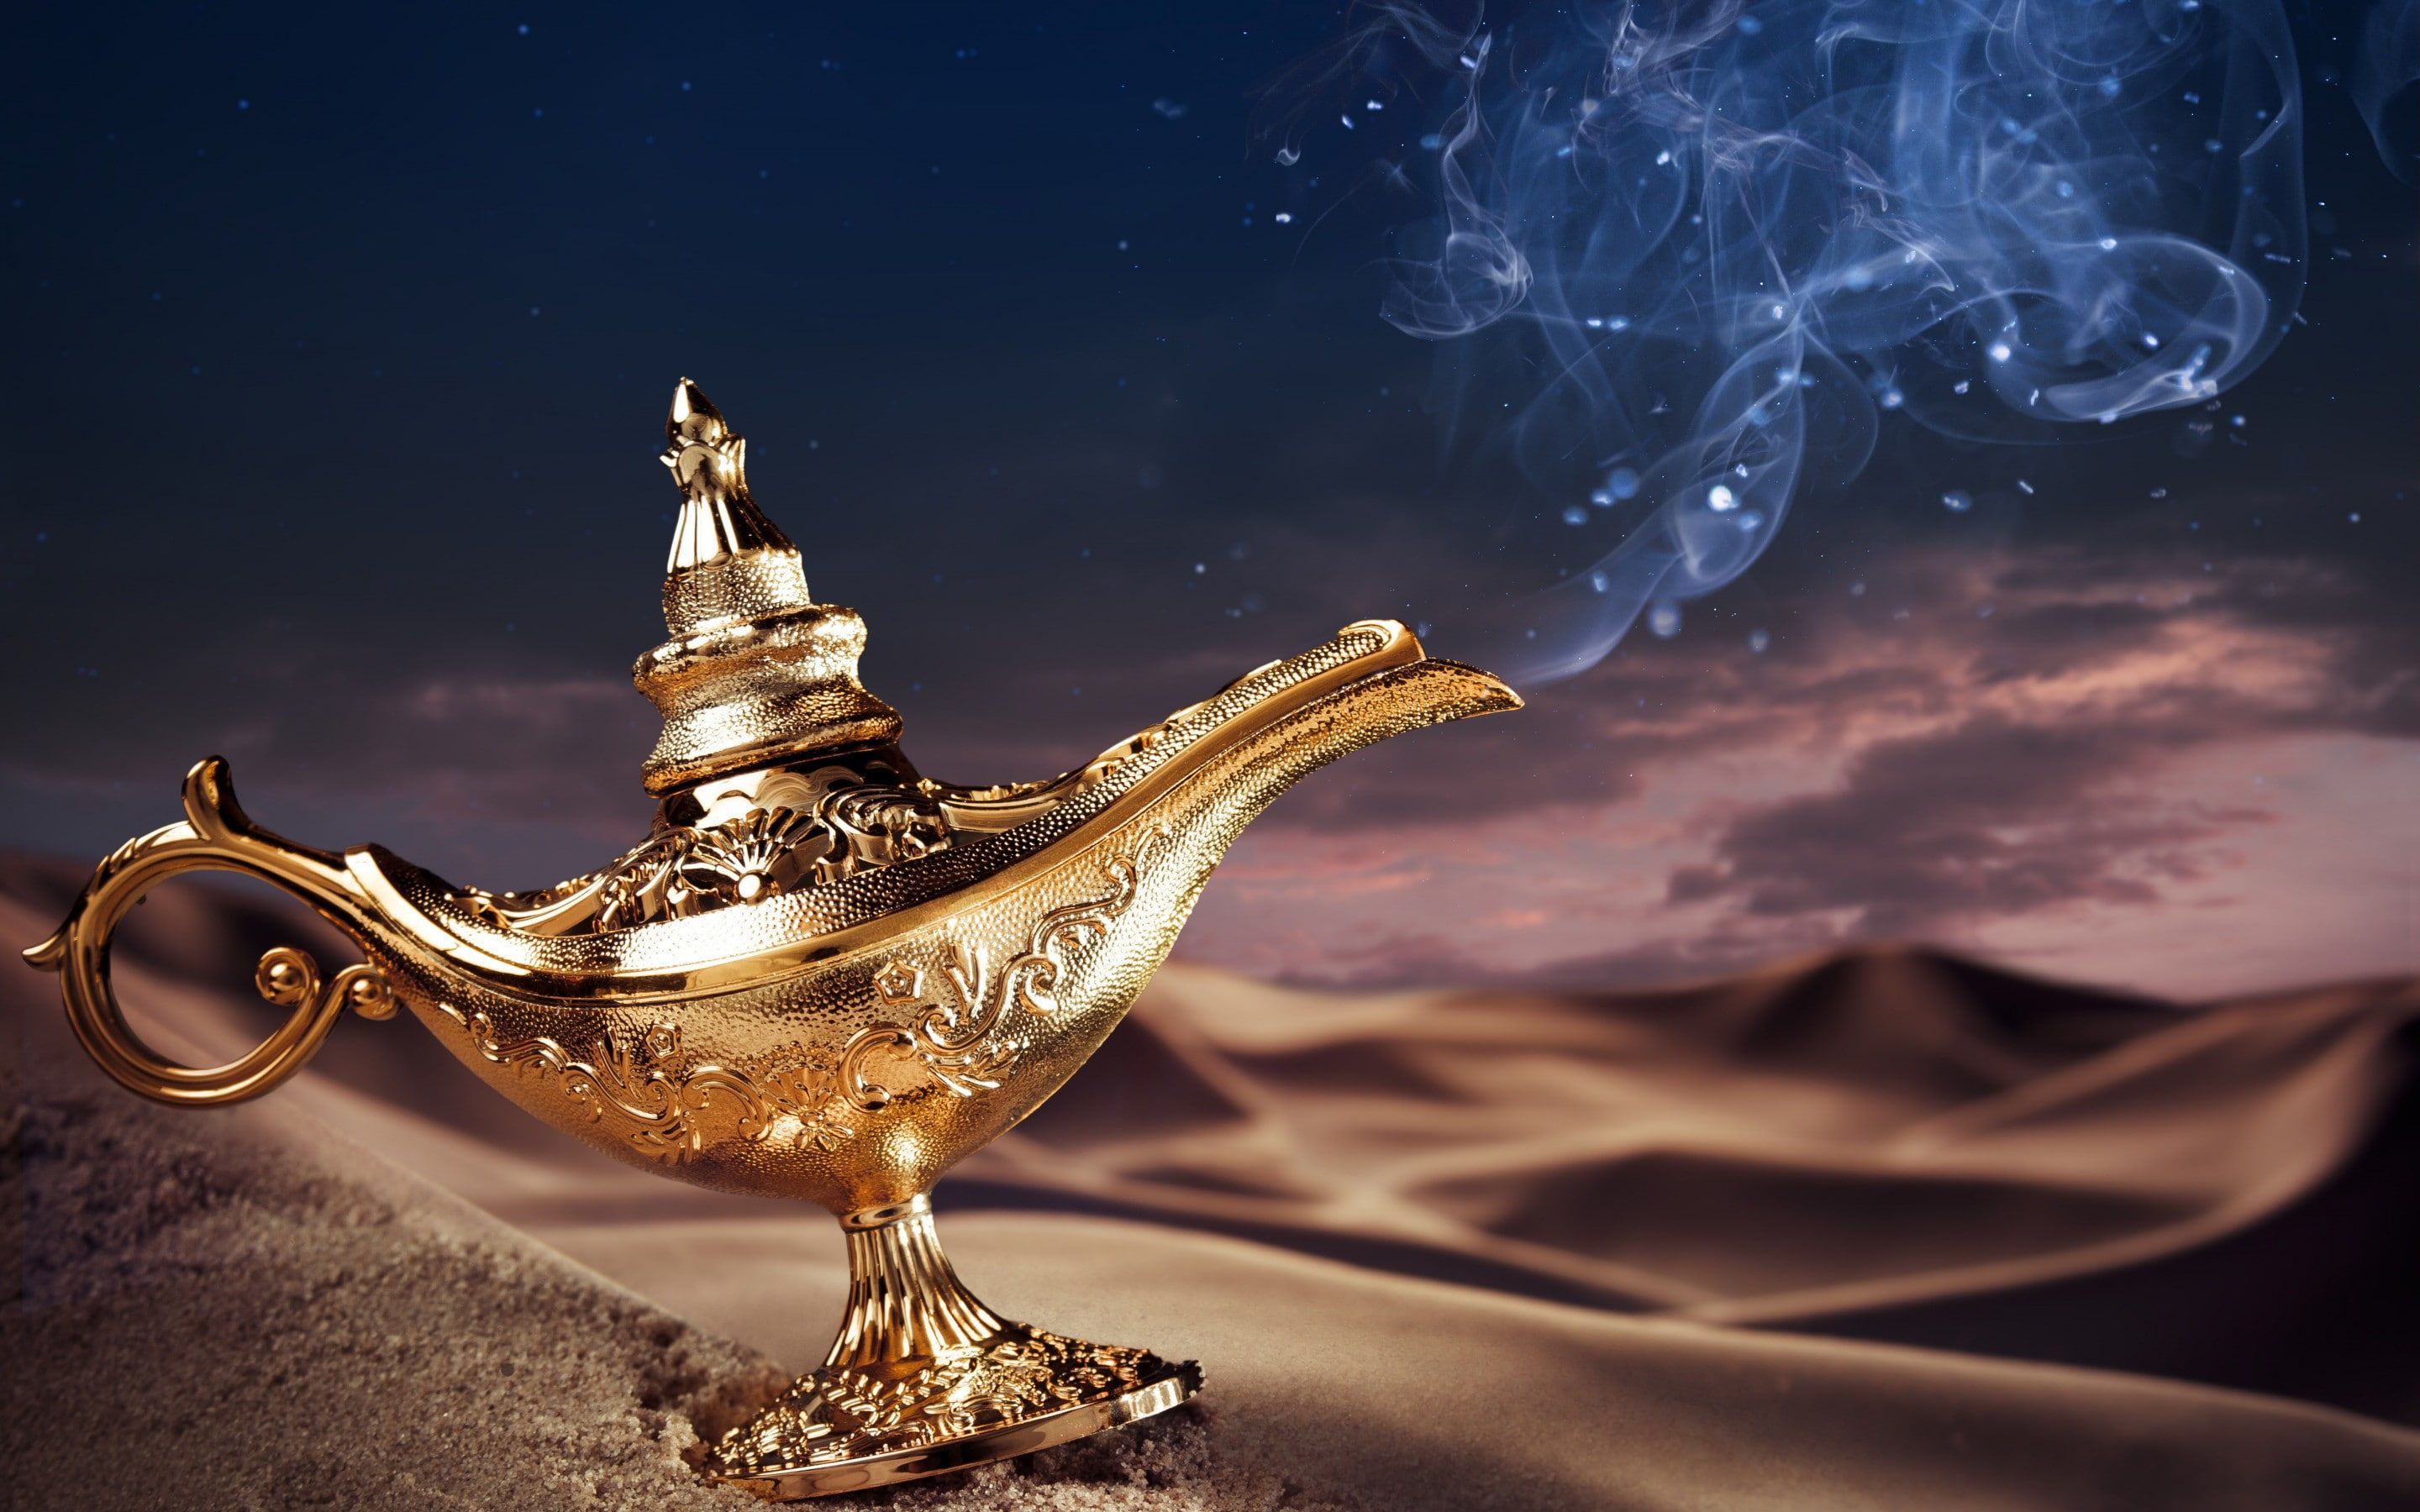 Lamp magic models, gold genie lamp illustration #background #desert #magic # lamp #models #picture K #wallpaper #hdwallpaper. Aladdin lamp, Genie lamp, Aladdin